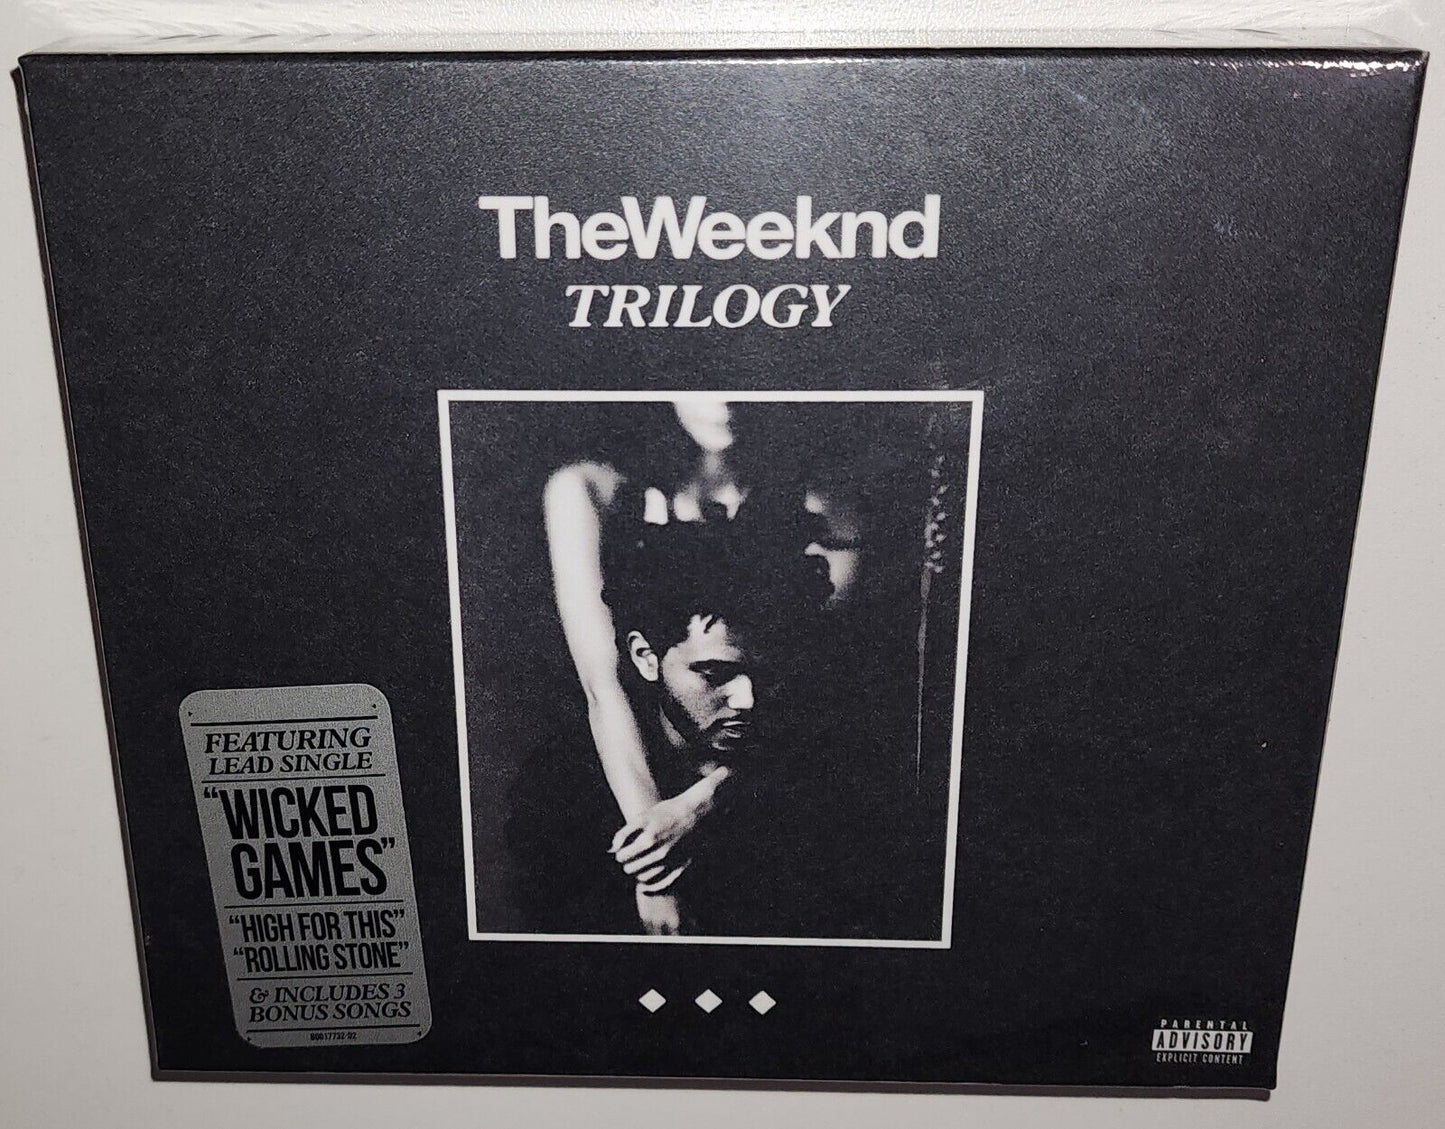 The Weeknd - Trilogy (2012) (3CD Set)